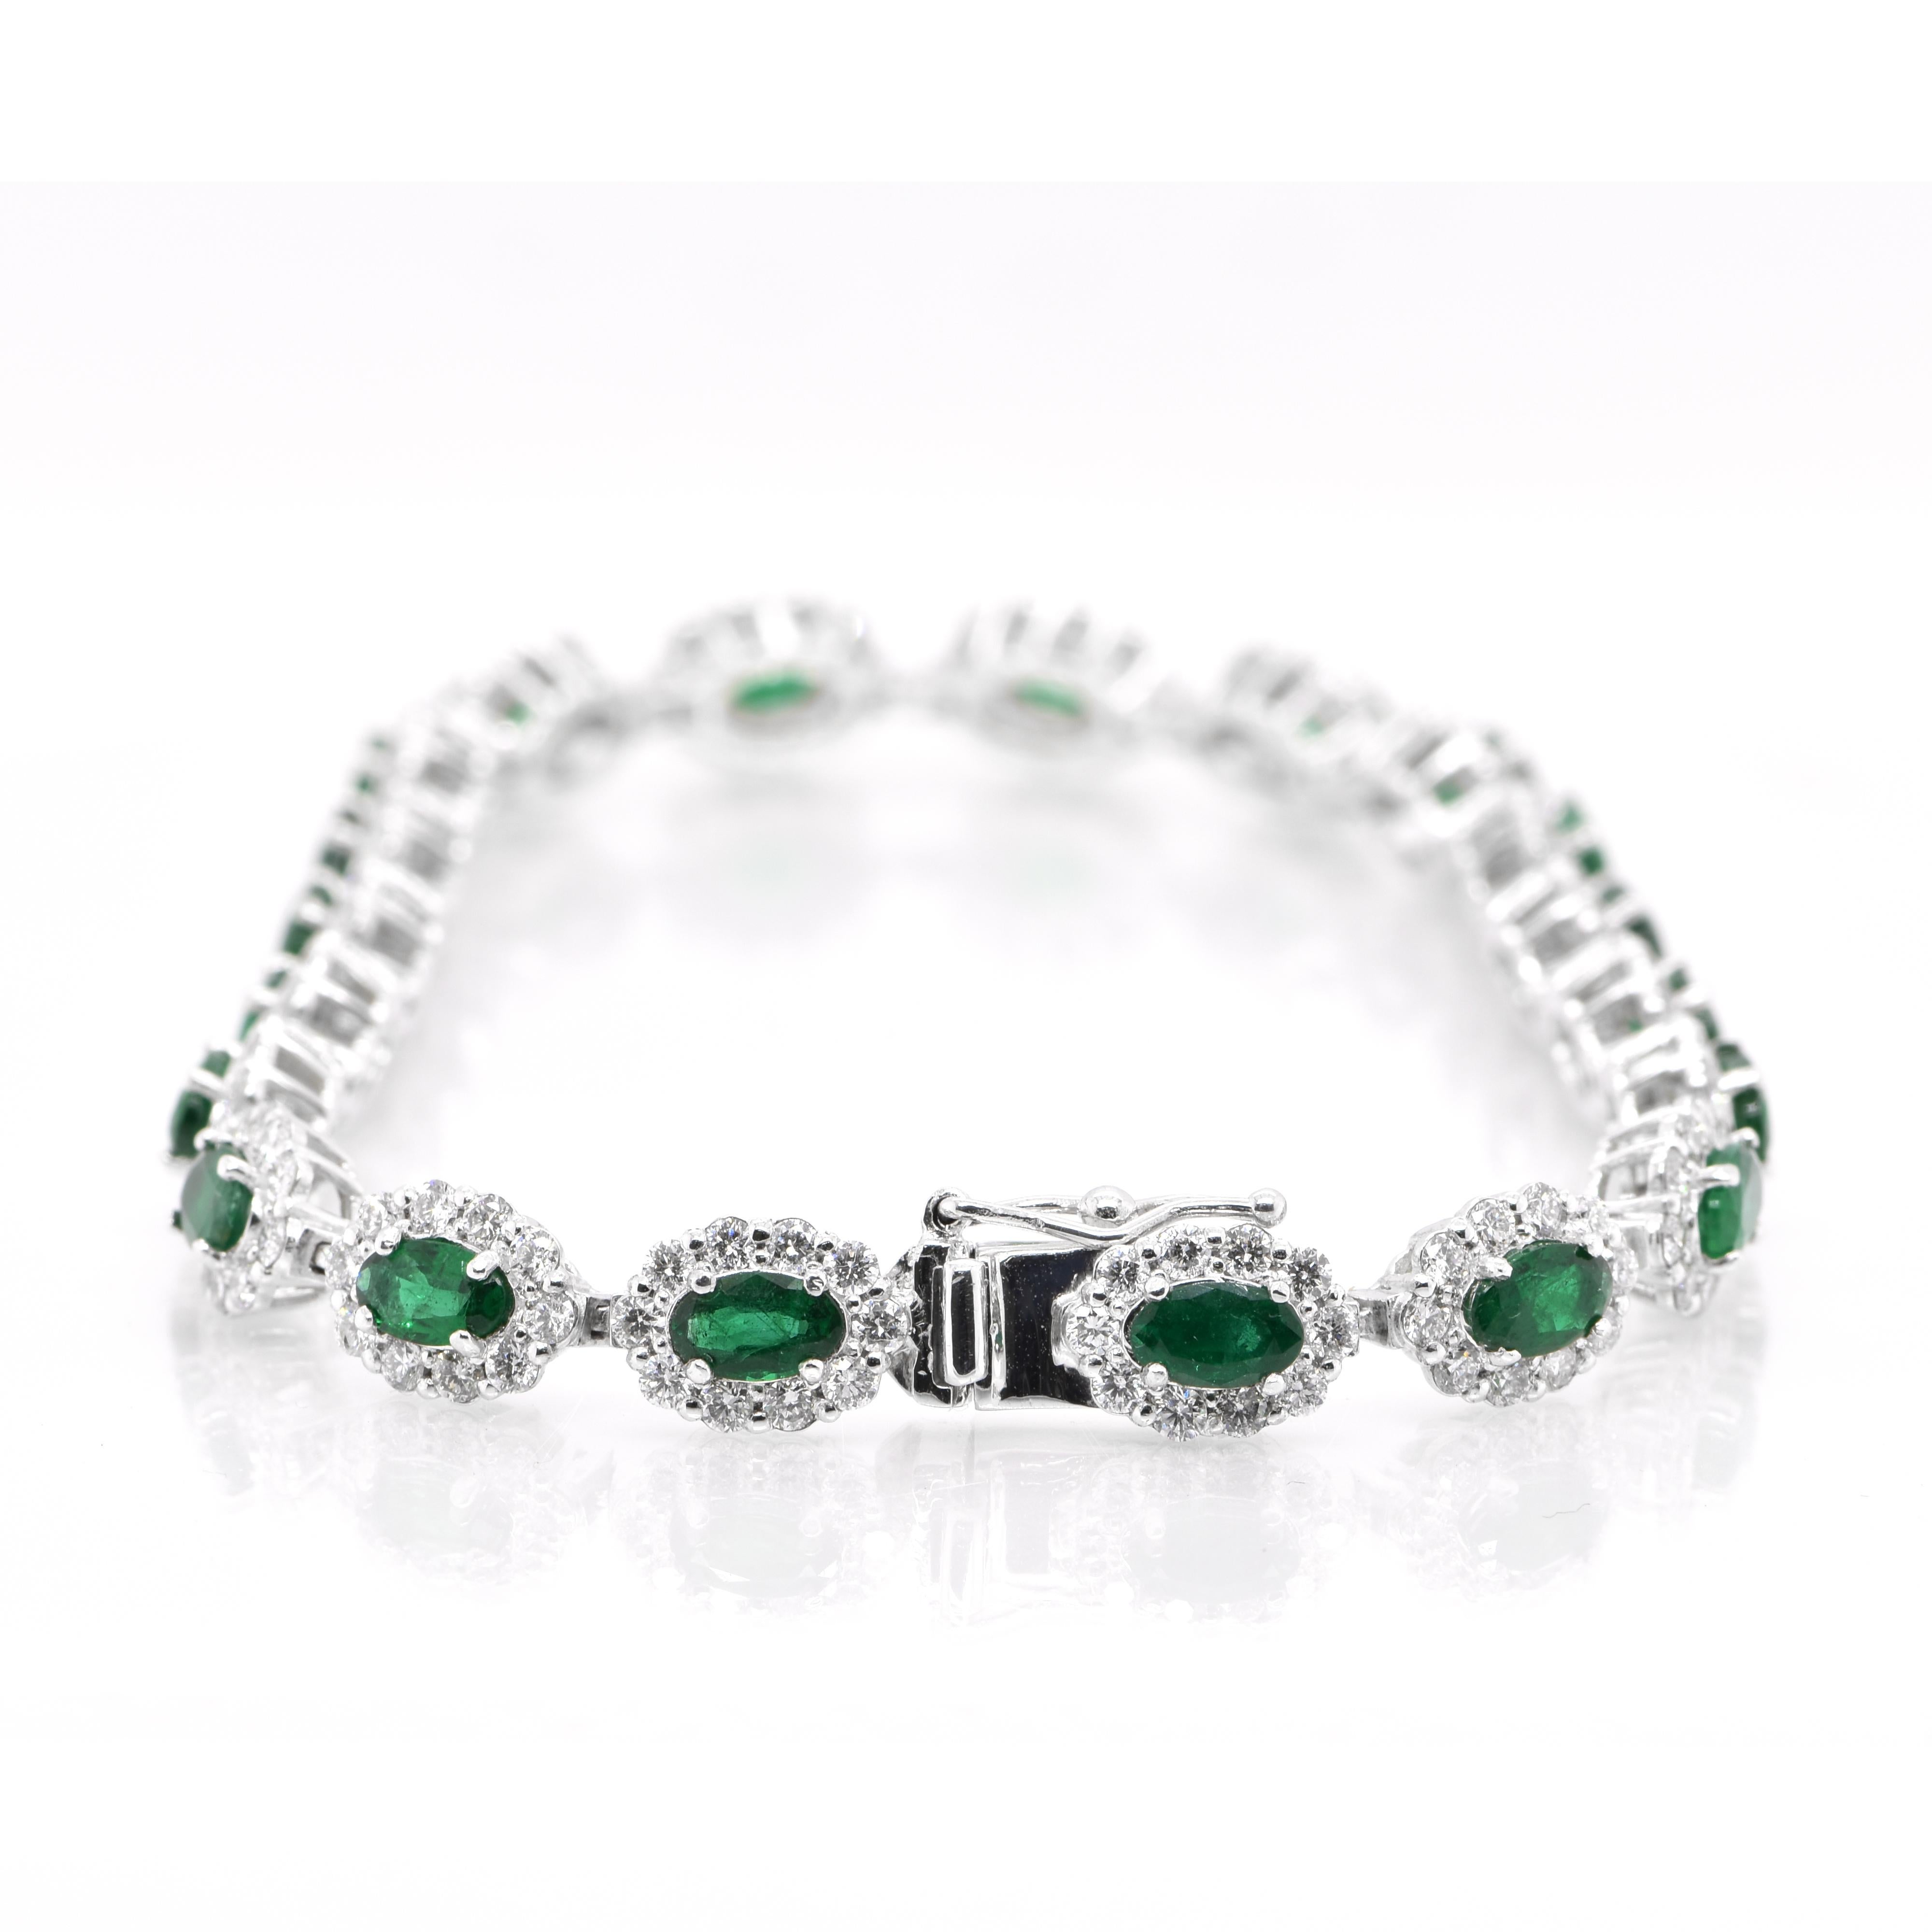 Oval Cut 4.55 Carats, Natural Emeralds and Diamond Tennis Bracelet Set in Platinum